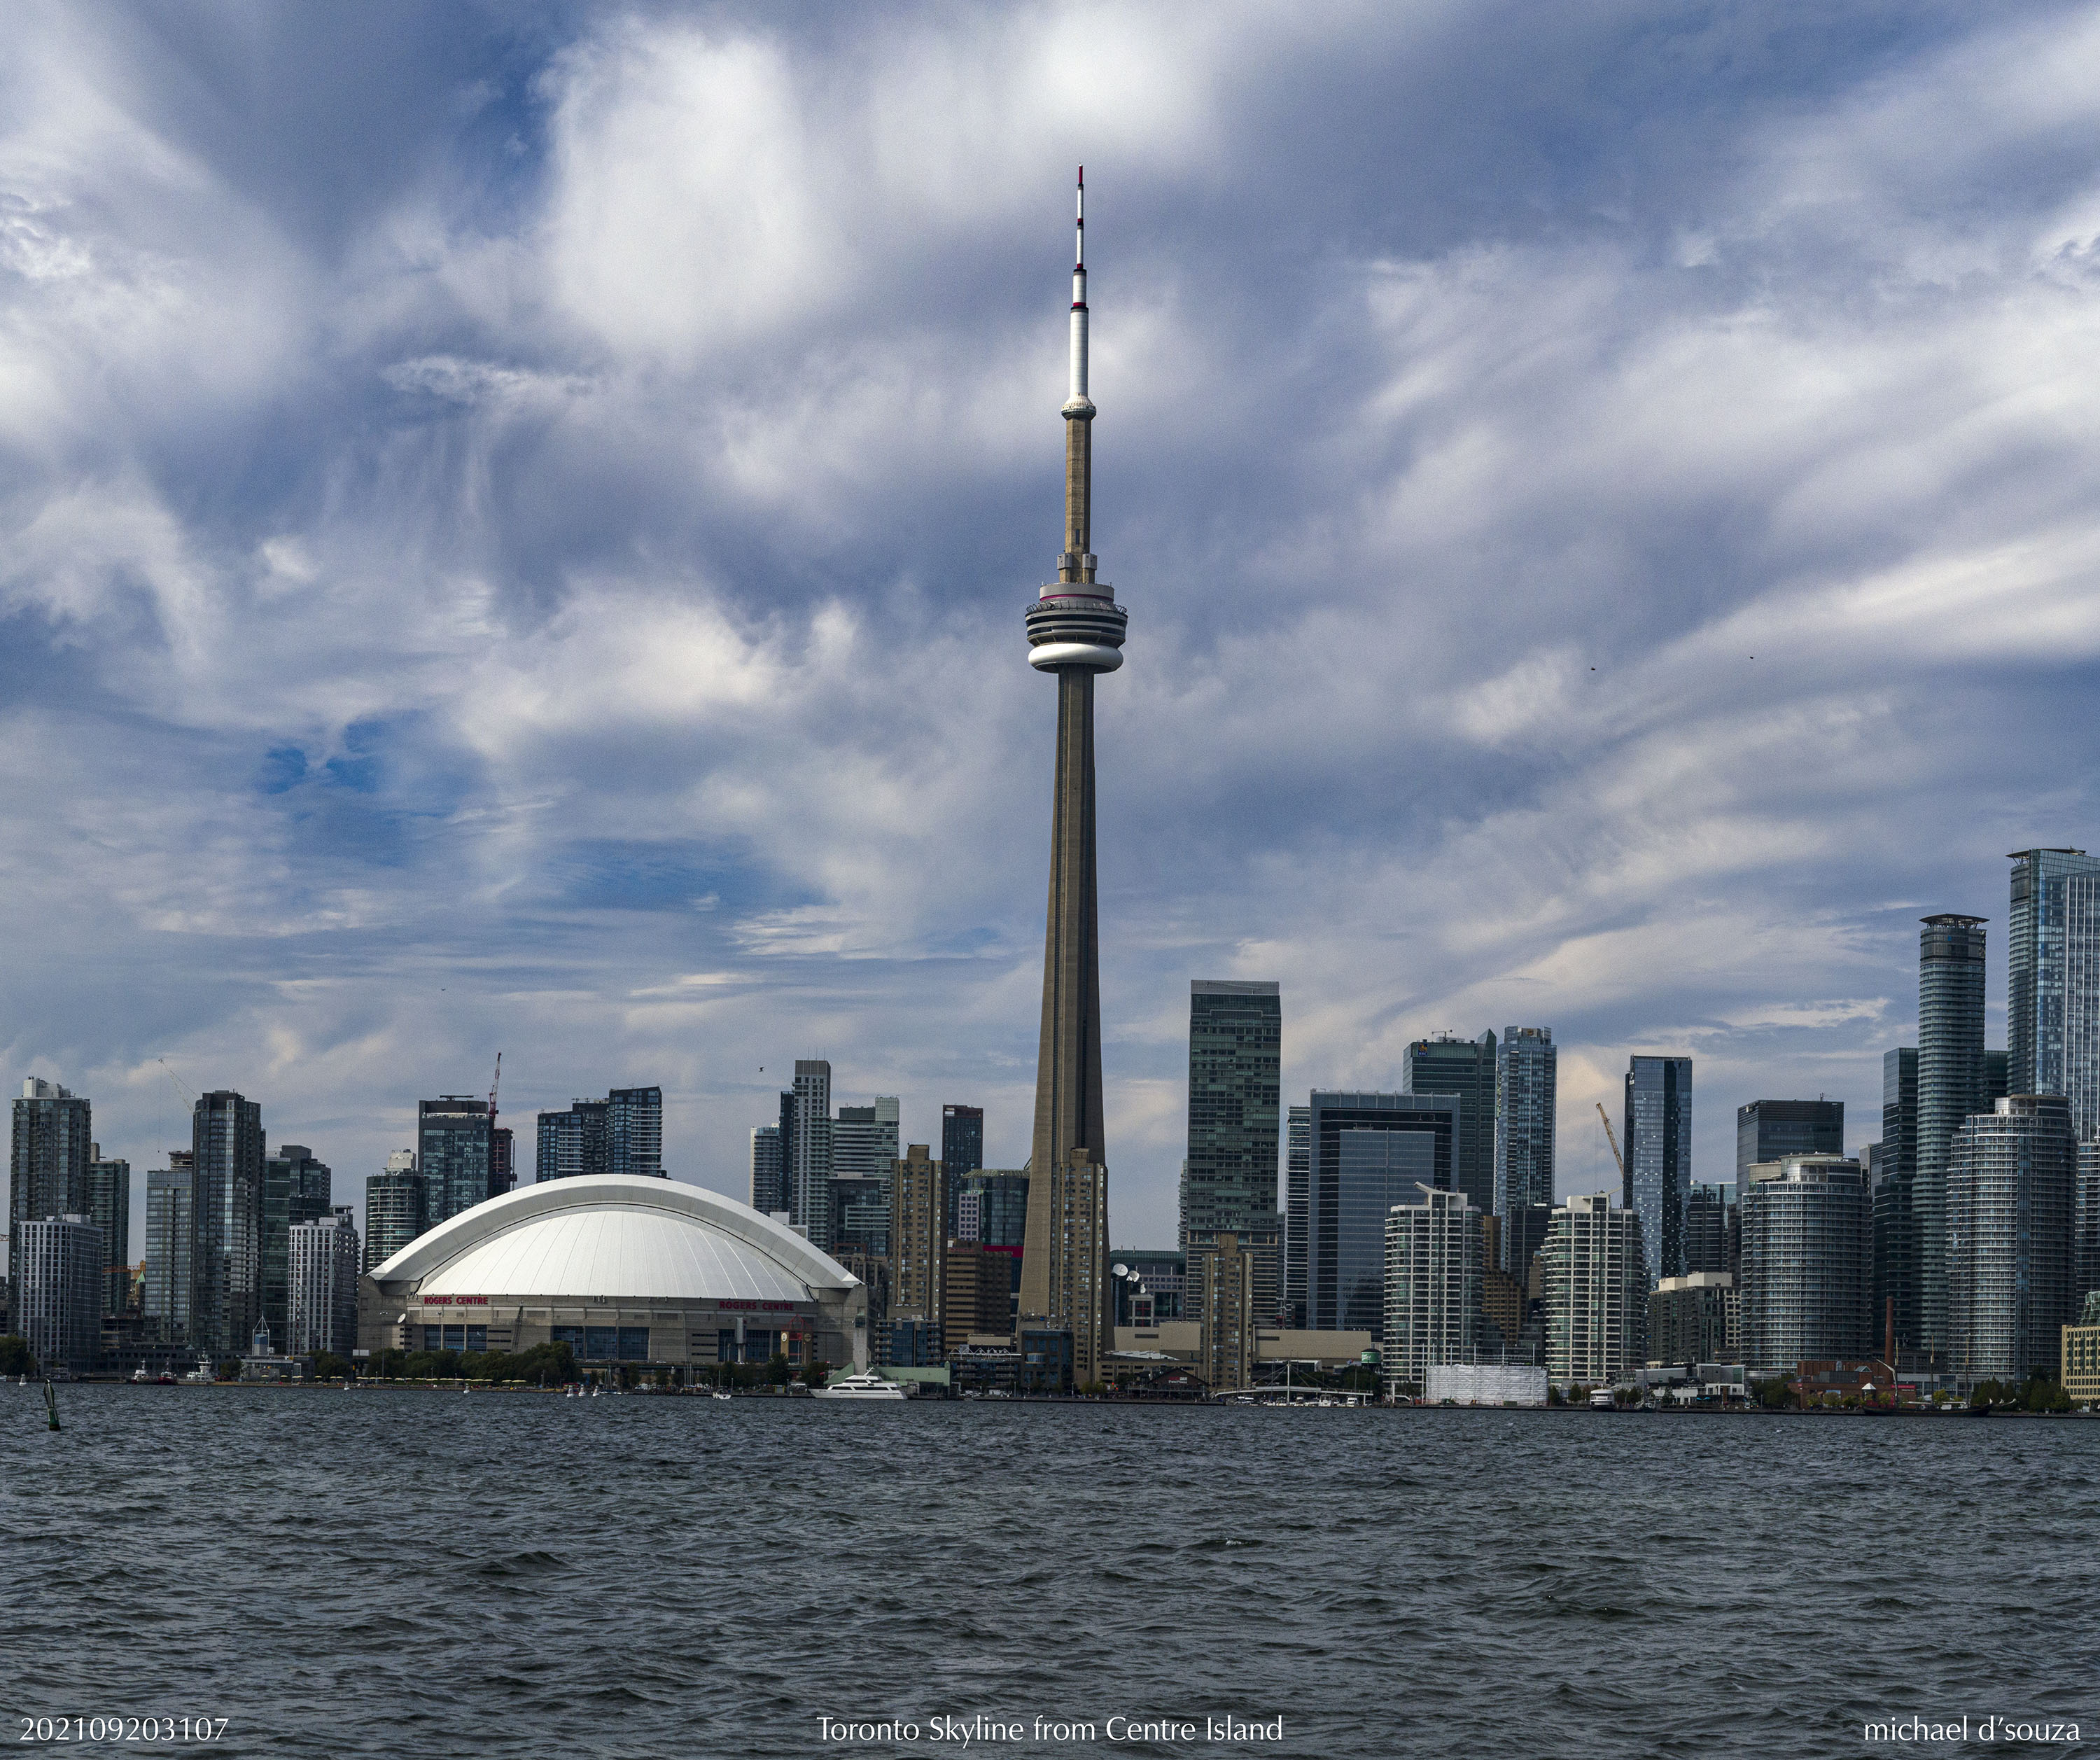 Toronto Skyline from Centre Island, September 20 2021